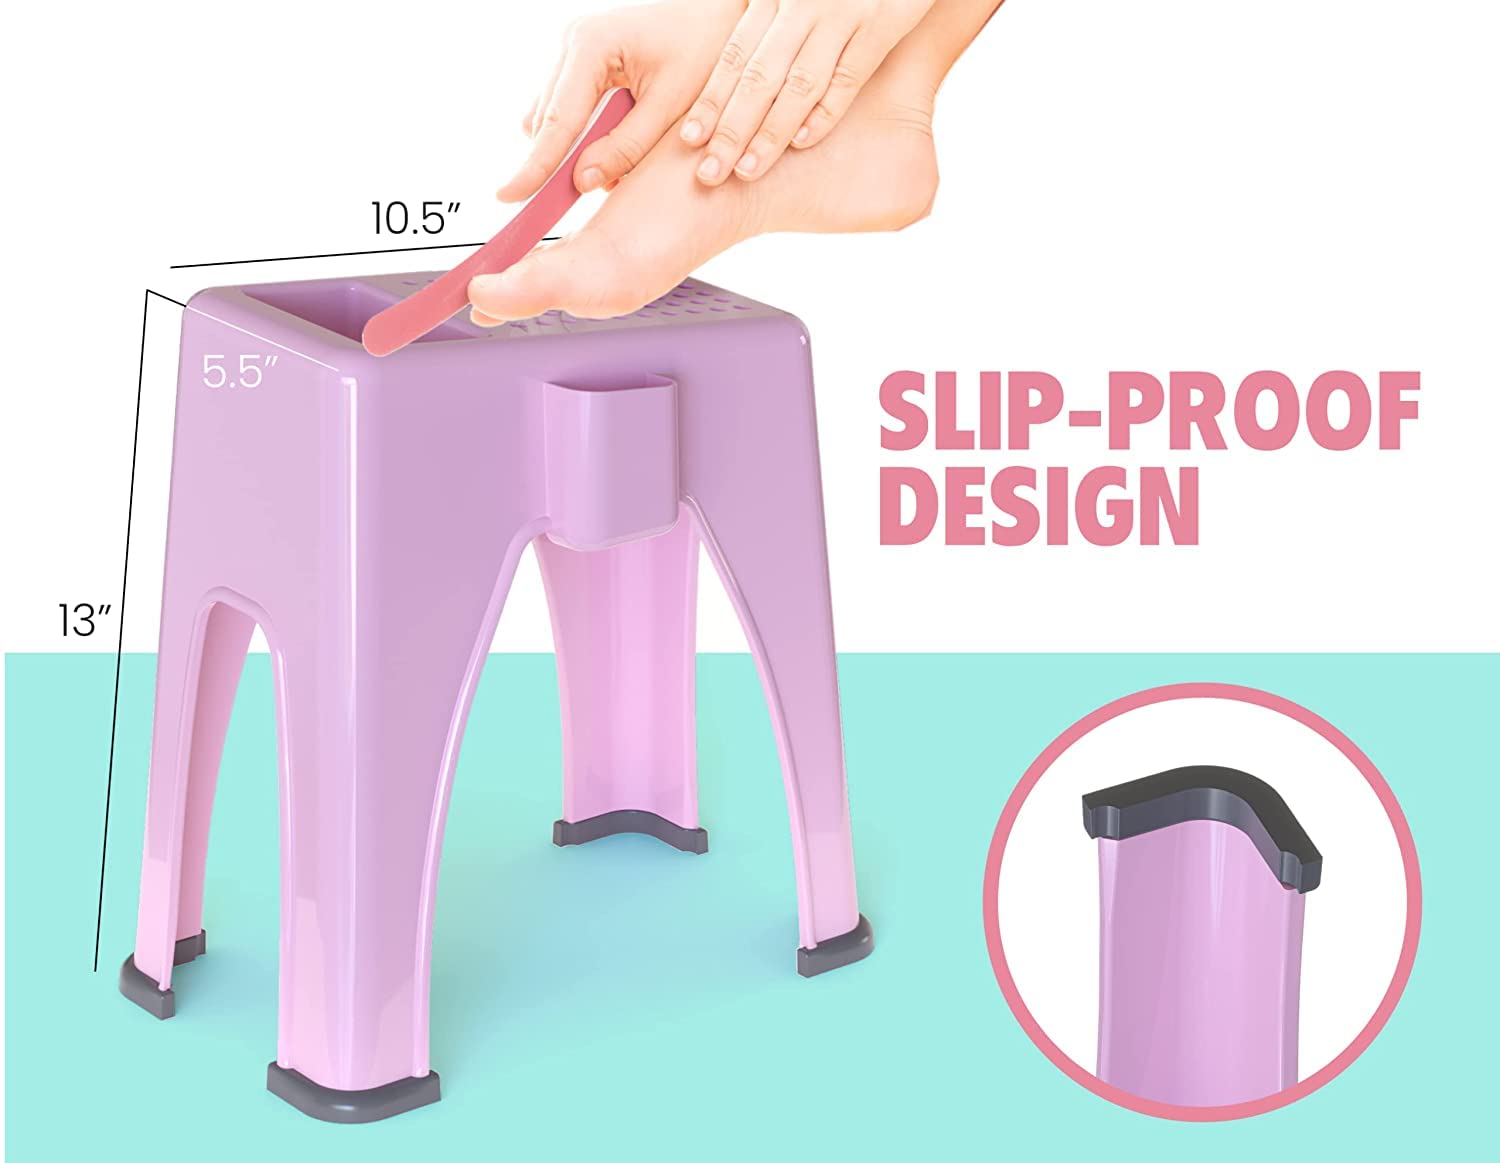 Skywin Shower Shaving Foot Rest - Plastic Shower Stool for Shaving Legs, 3 Pockets Hold Shaving Essentials, 9.27 x 7 x 10 Inches (Beige)